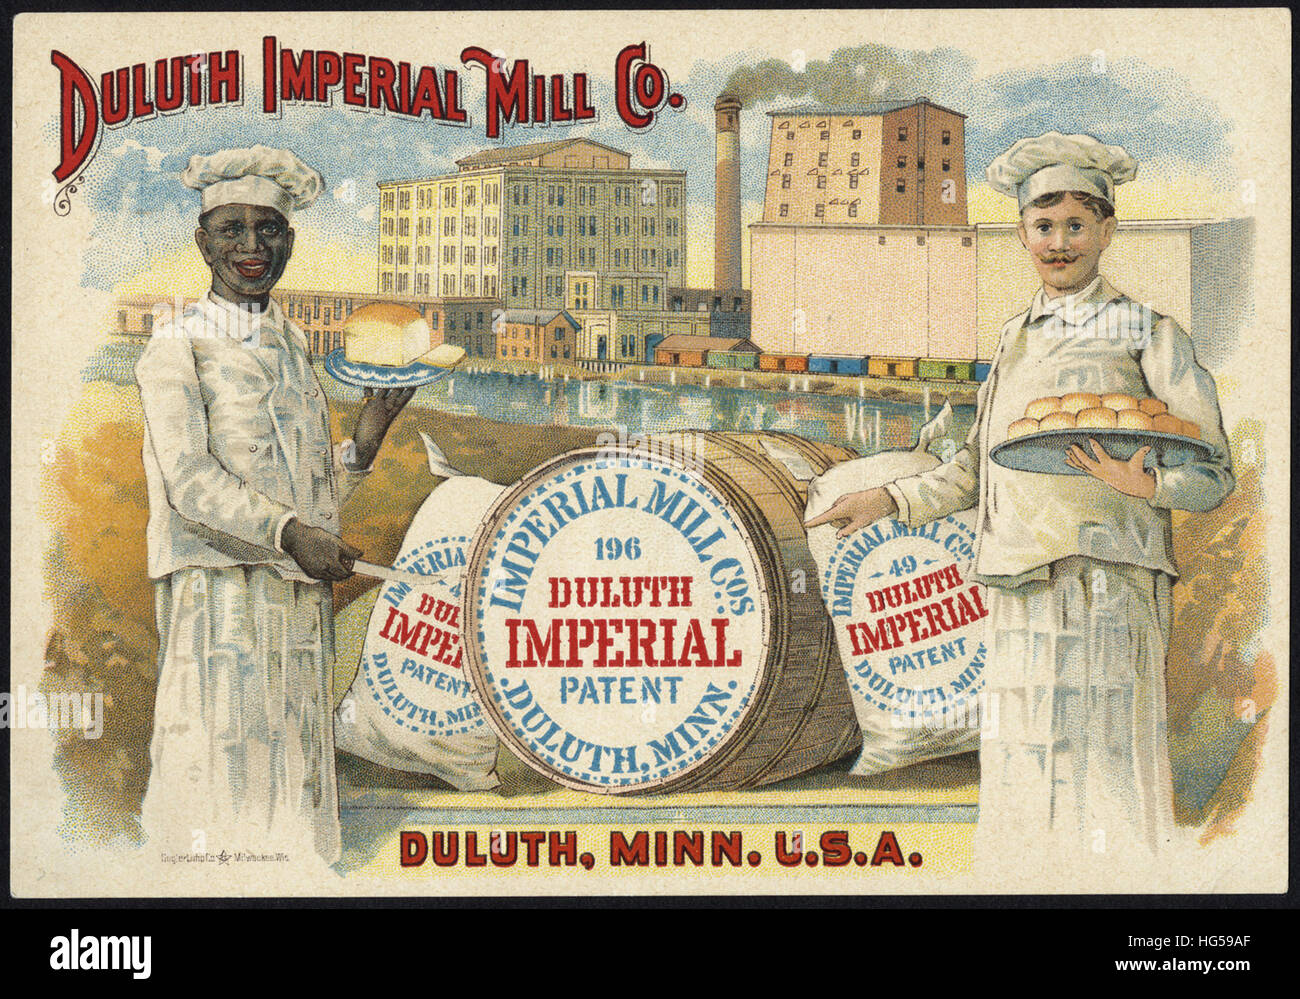 Hornear tarjeta comercial - Duluth Imperial Mill Co. - Quién hace el mejor pan  Foto de stock